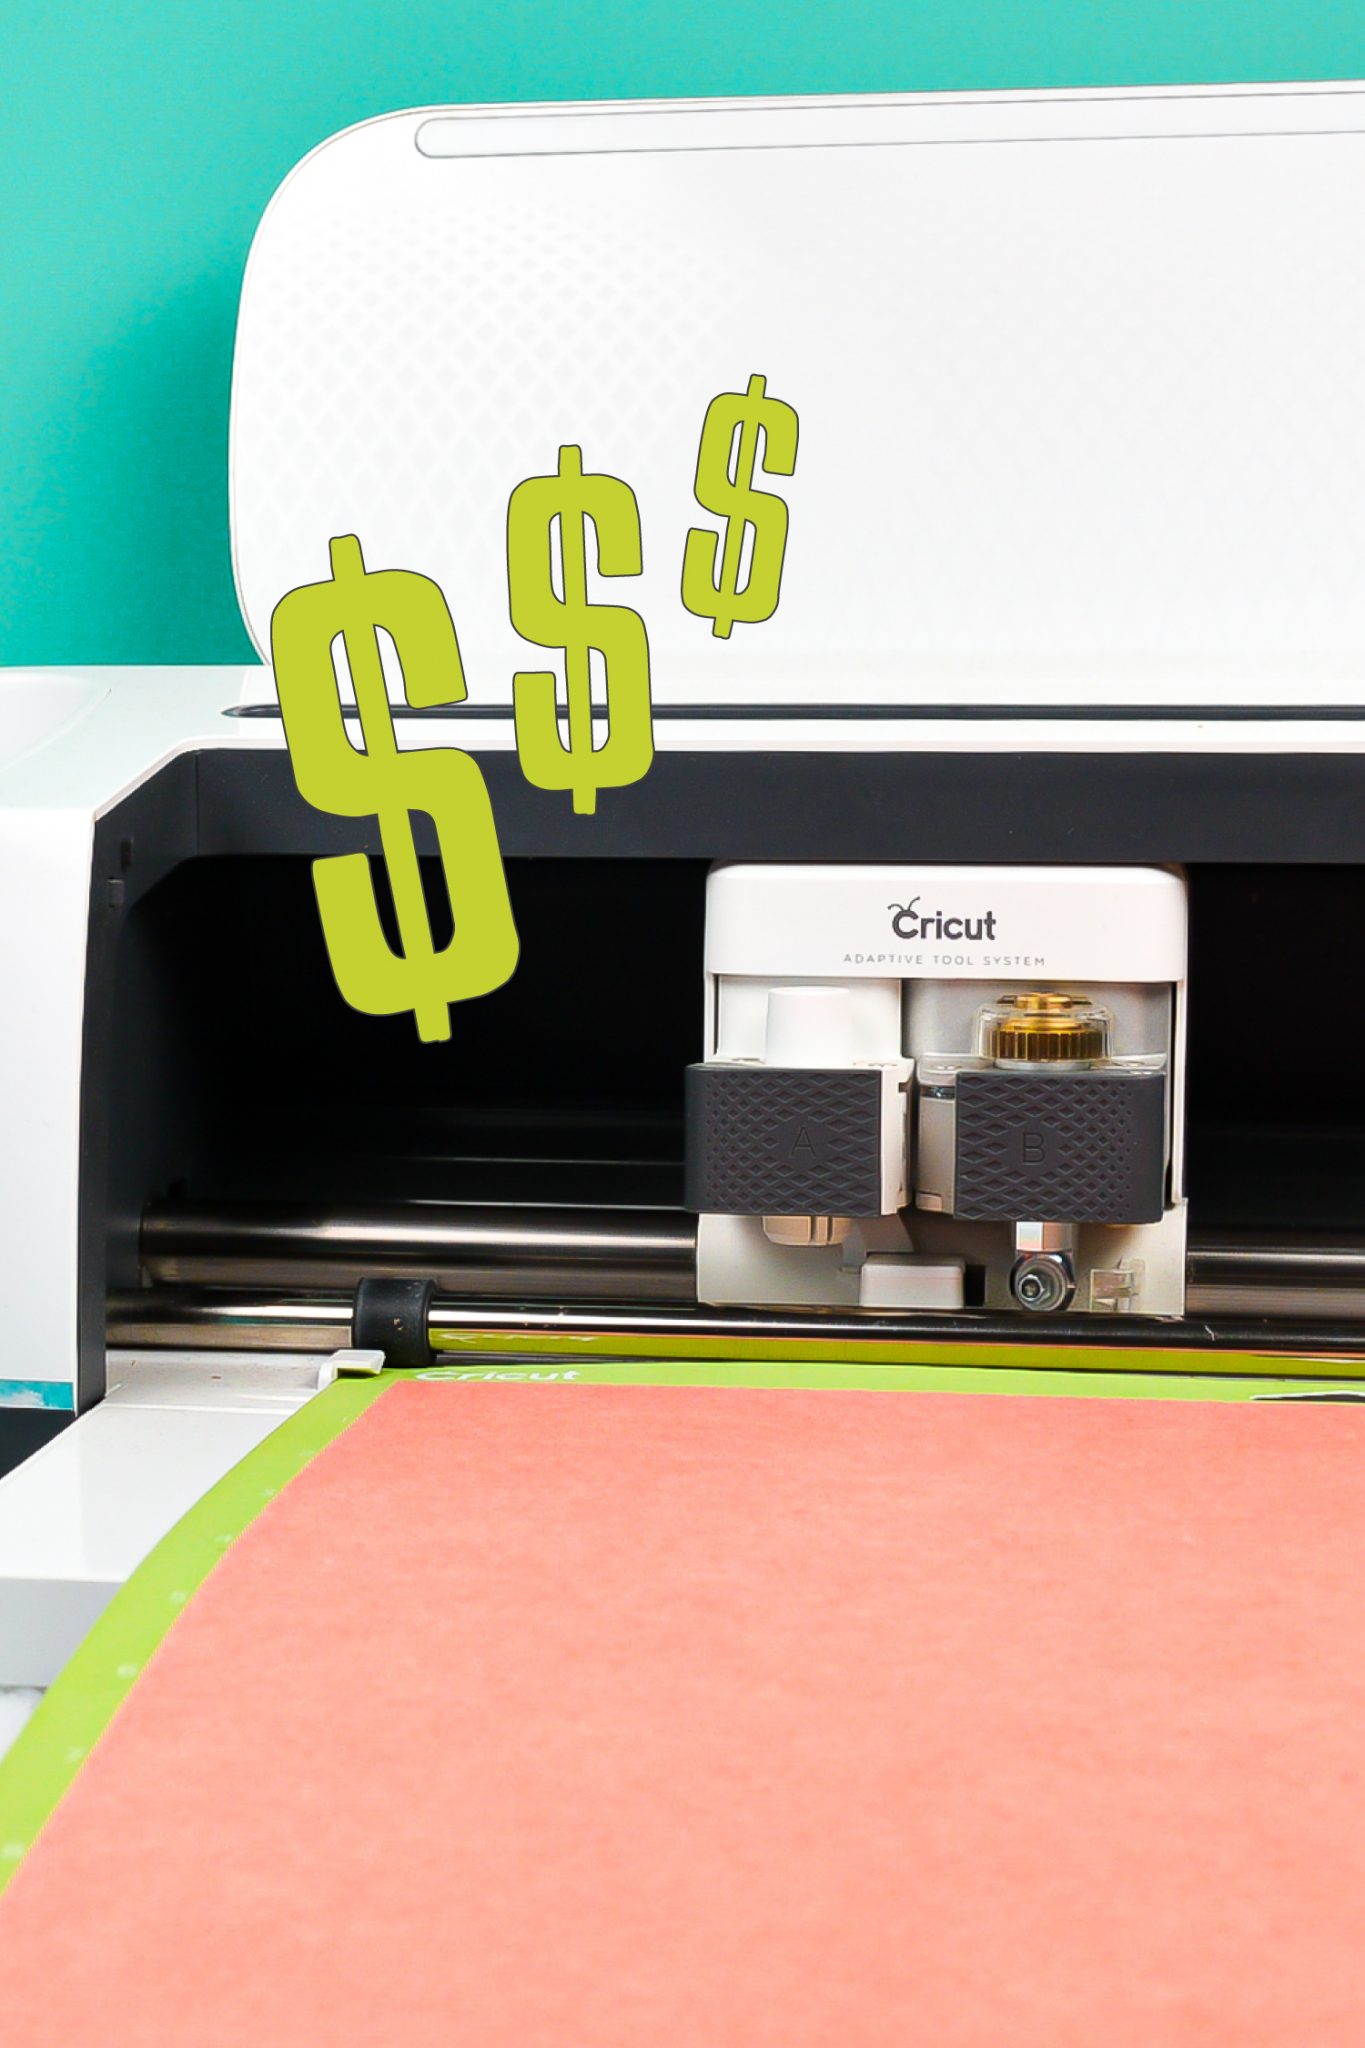 Get crafty when you save $70 on a Cricut Maker Machine